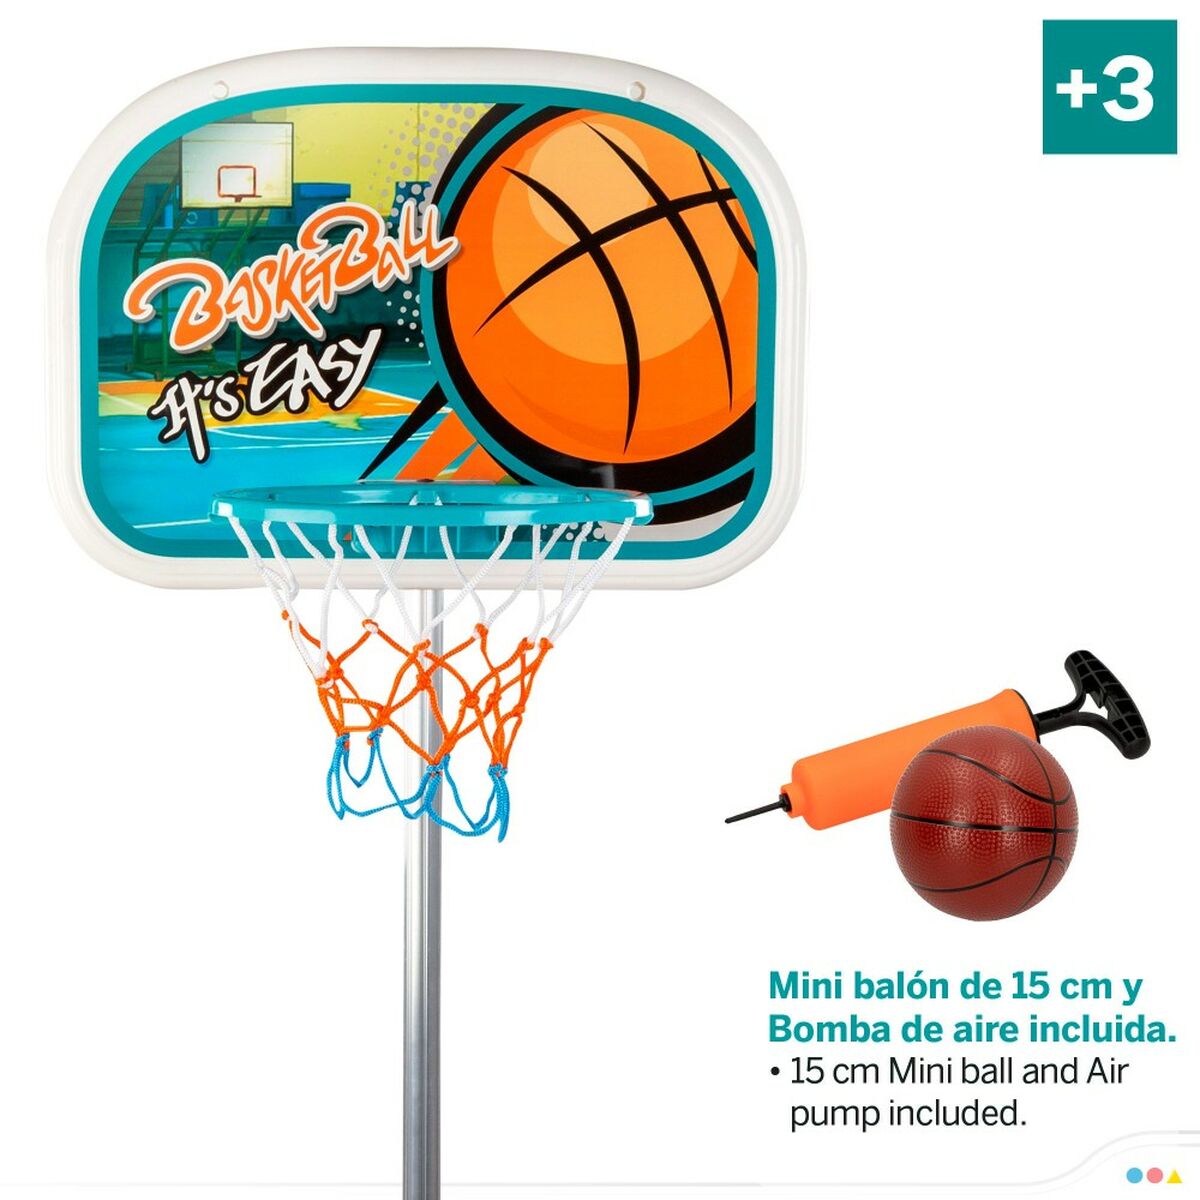 Basketballkorb Colorbaby 46,5 x 165 x 40 cm (2 Stück)